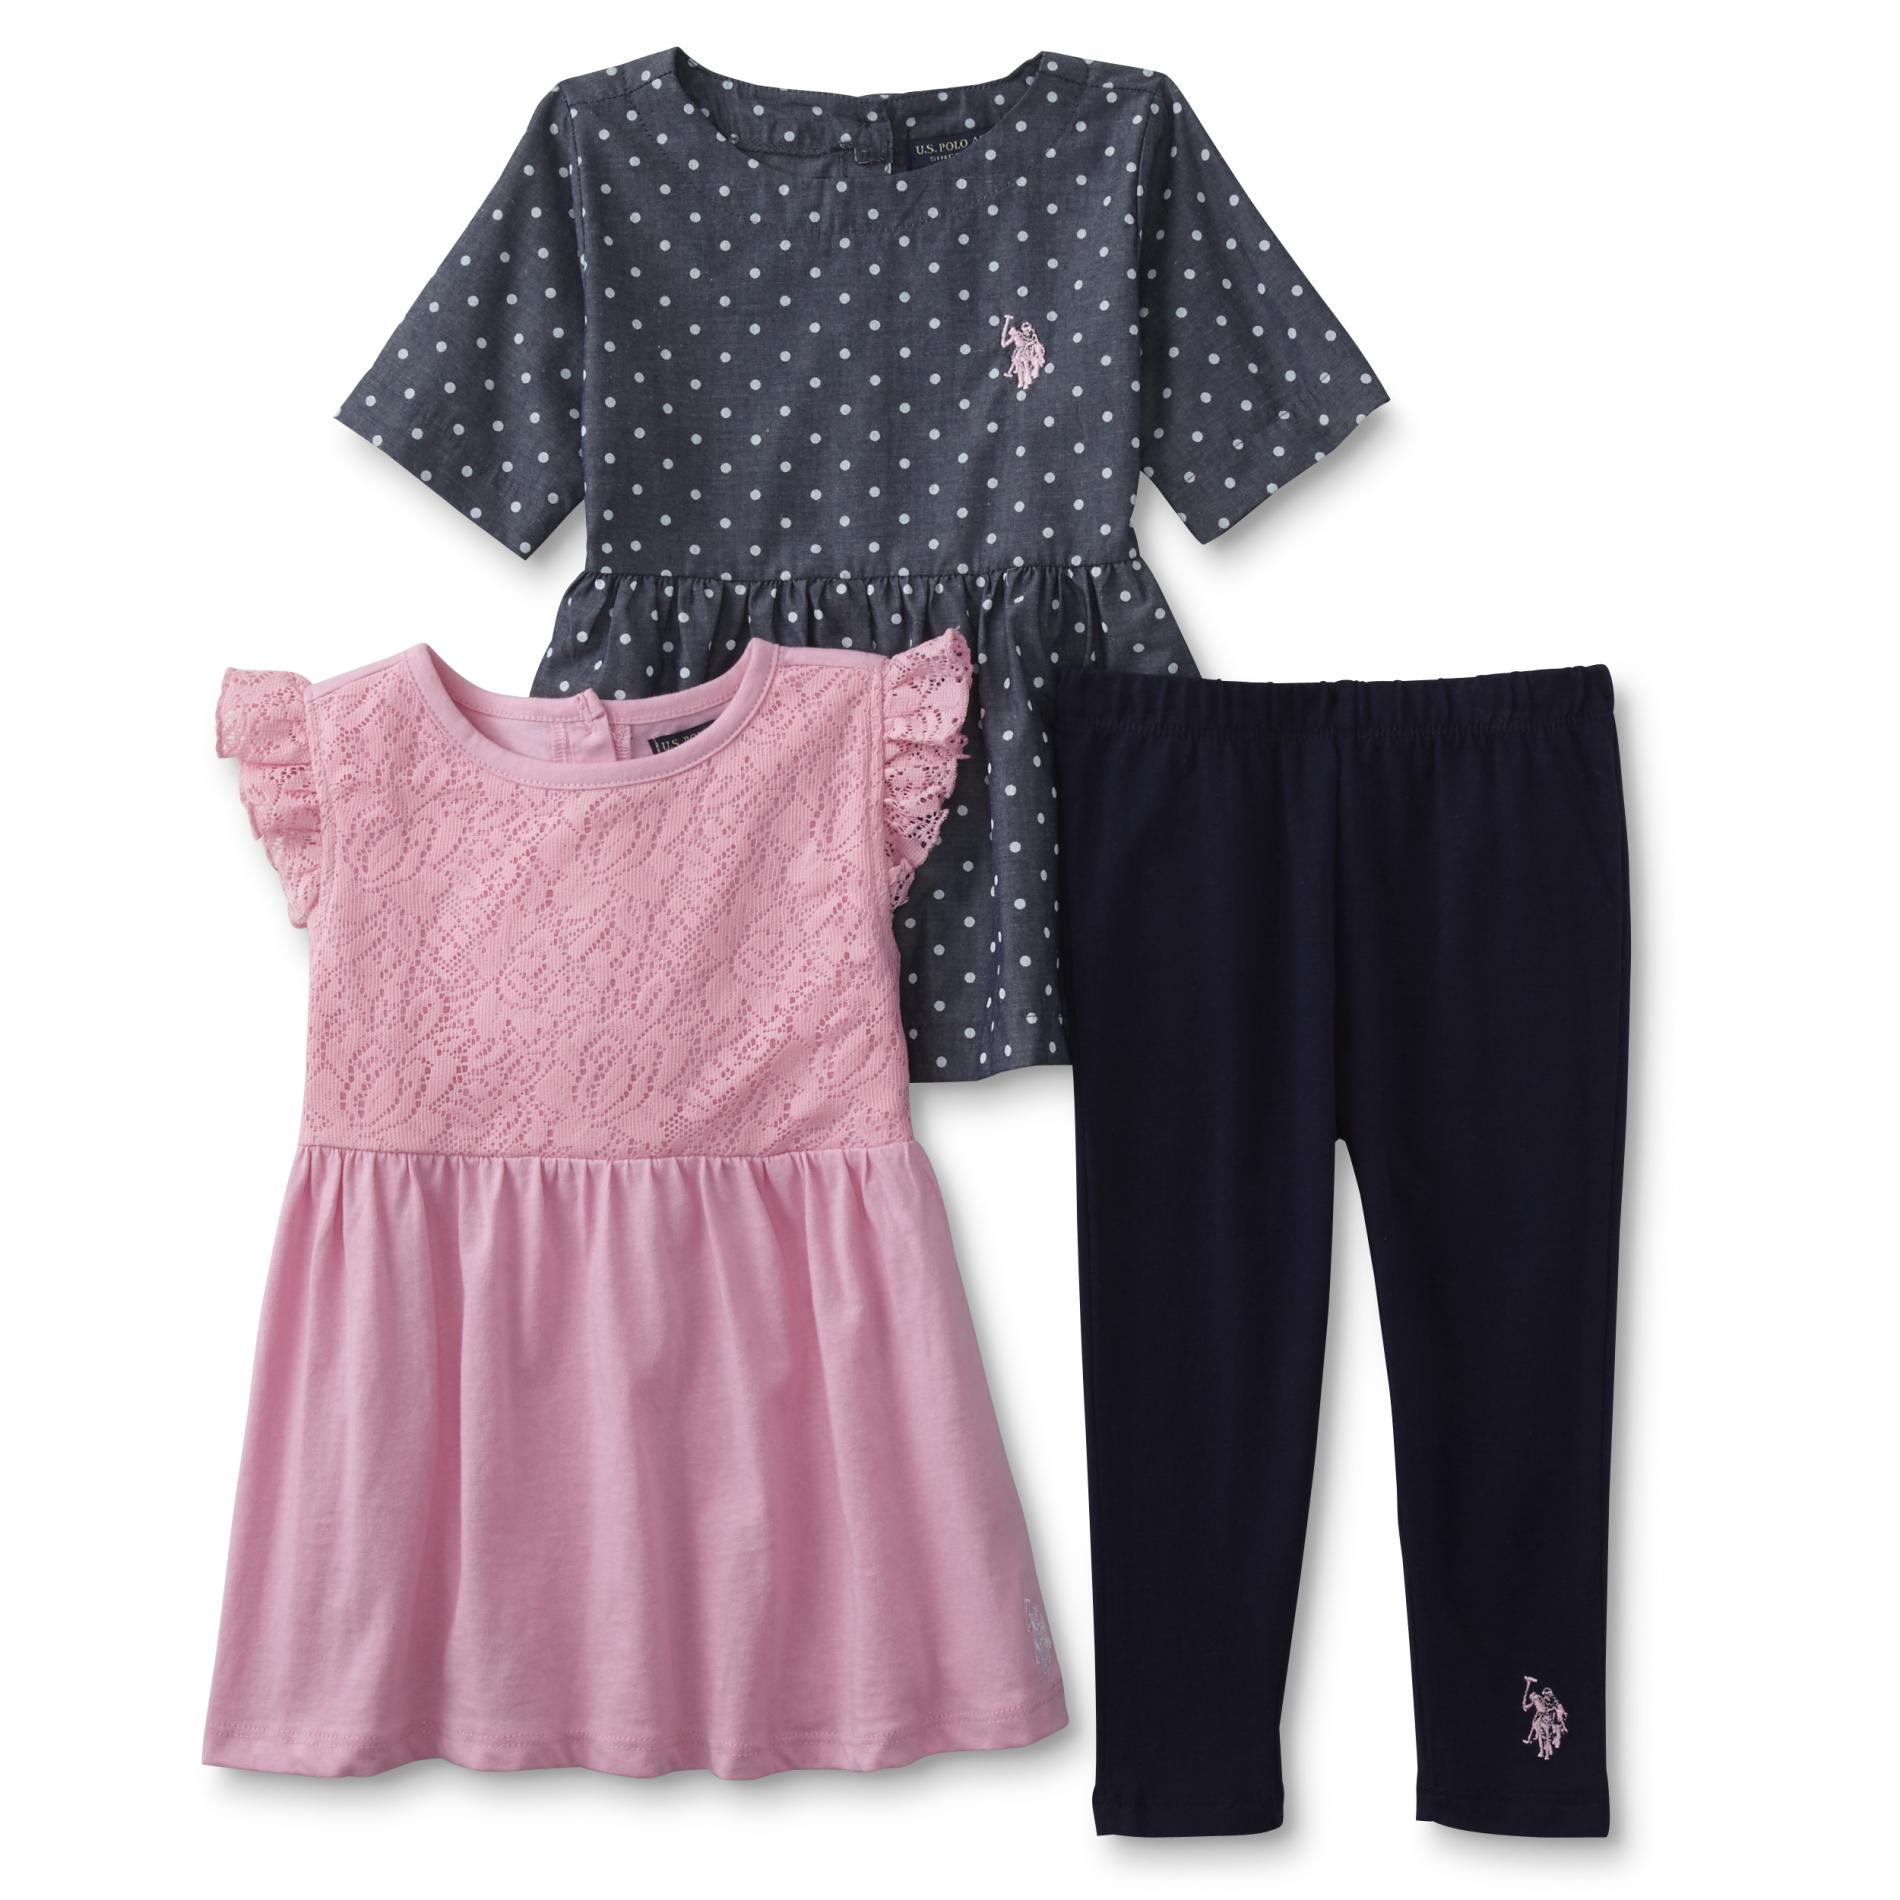 U.S. Polo Assn. Infant & Toddler Girls' Tunic, Dress & Leggings - Dots